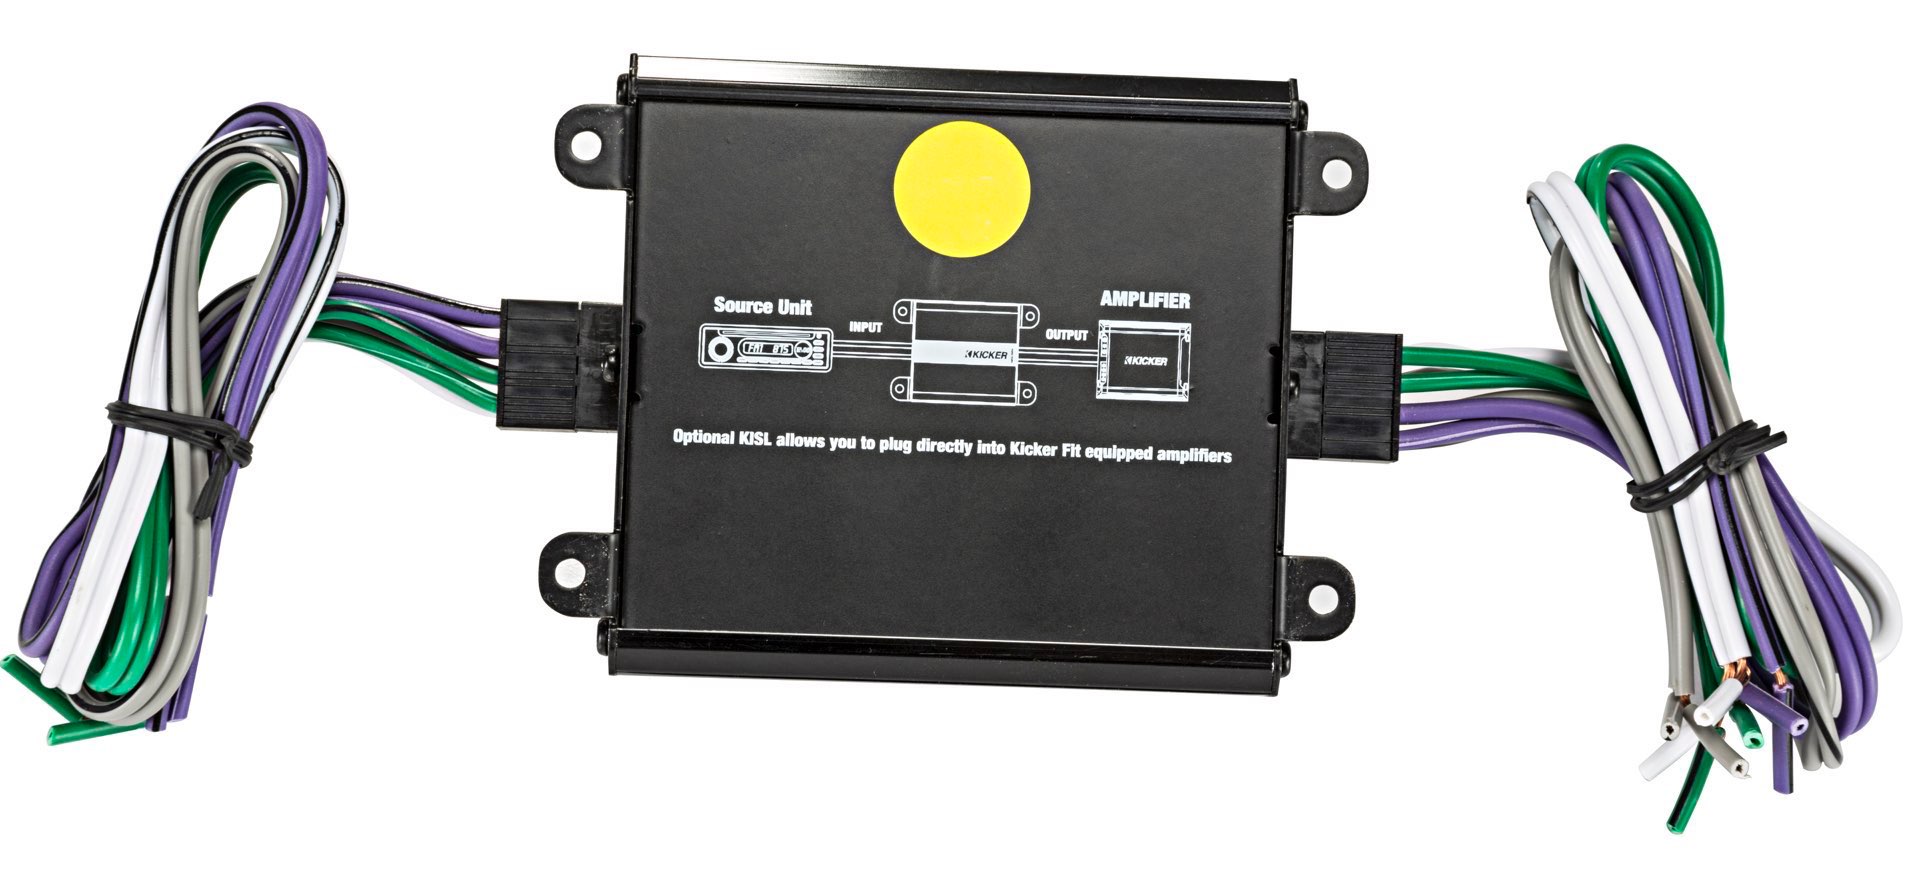 KICKER KISLOAD4 4 CH Smart Radio Interface 4 Kanal High Level Adapter